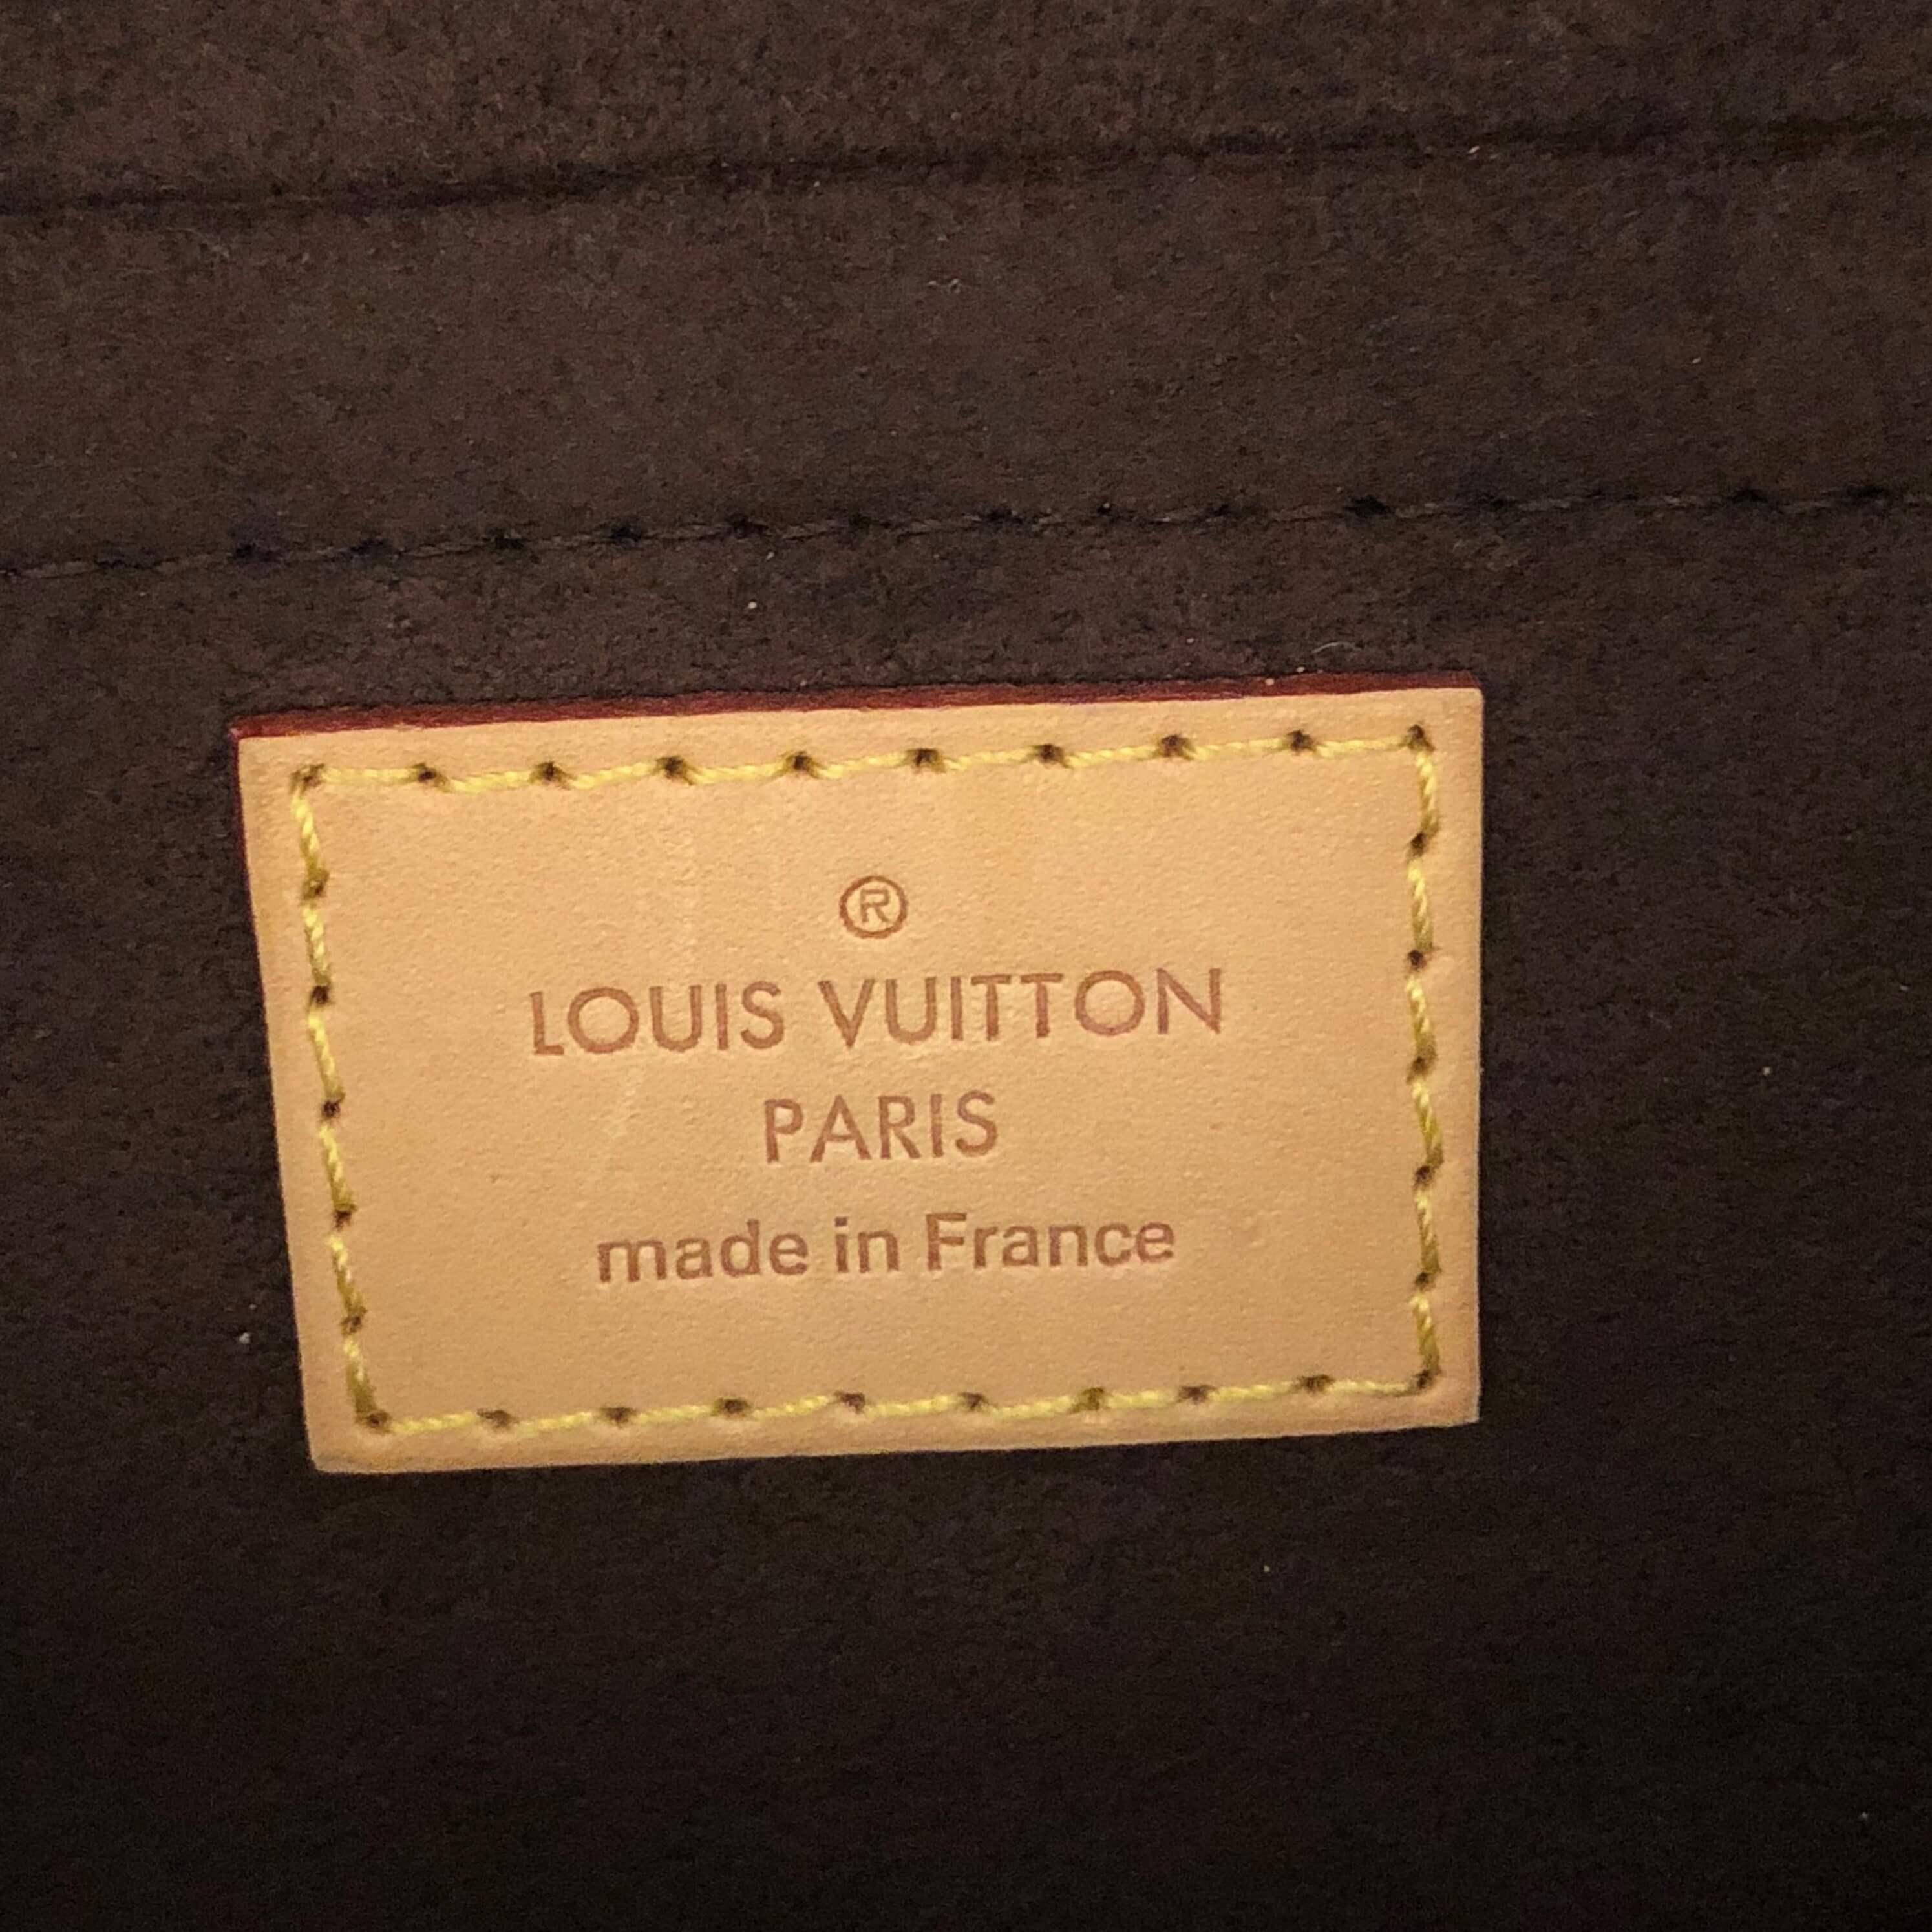 Louis Vuitton Lock It Blurry Monogram Brown in Coated Canvas